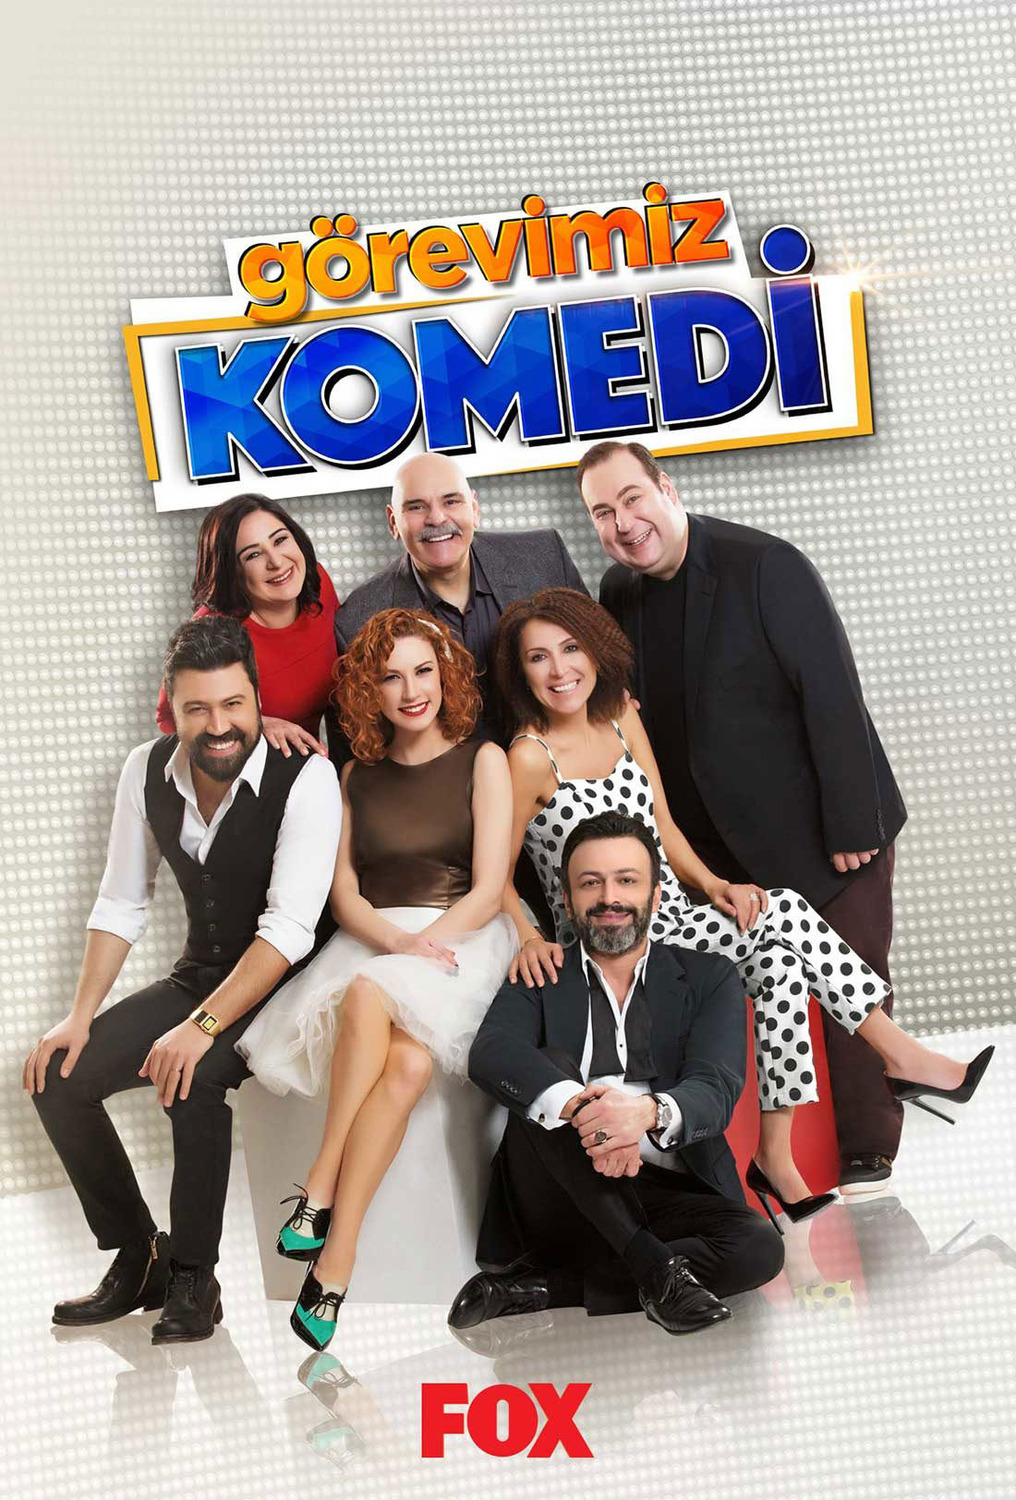 Extra Large TV Poster Image for Görevimiz komedi 